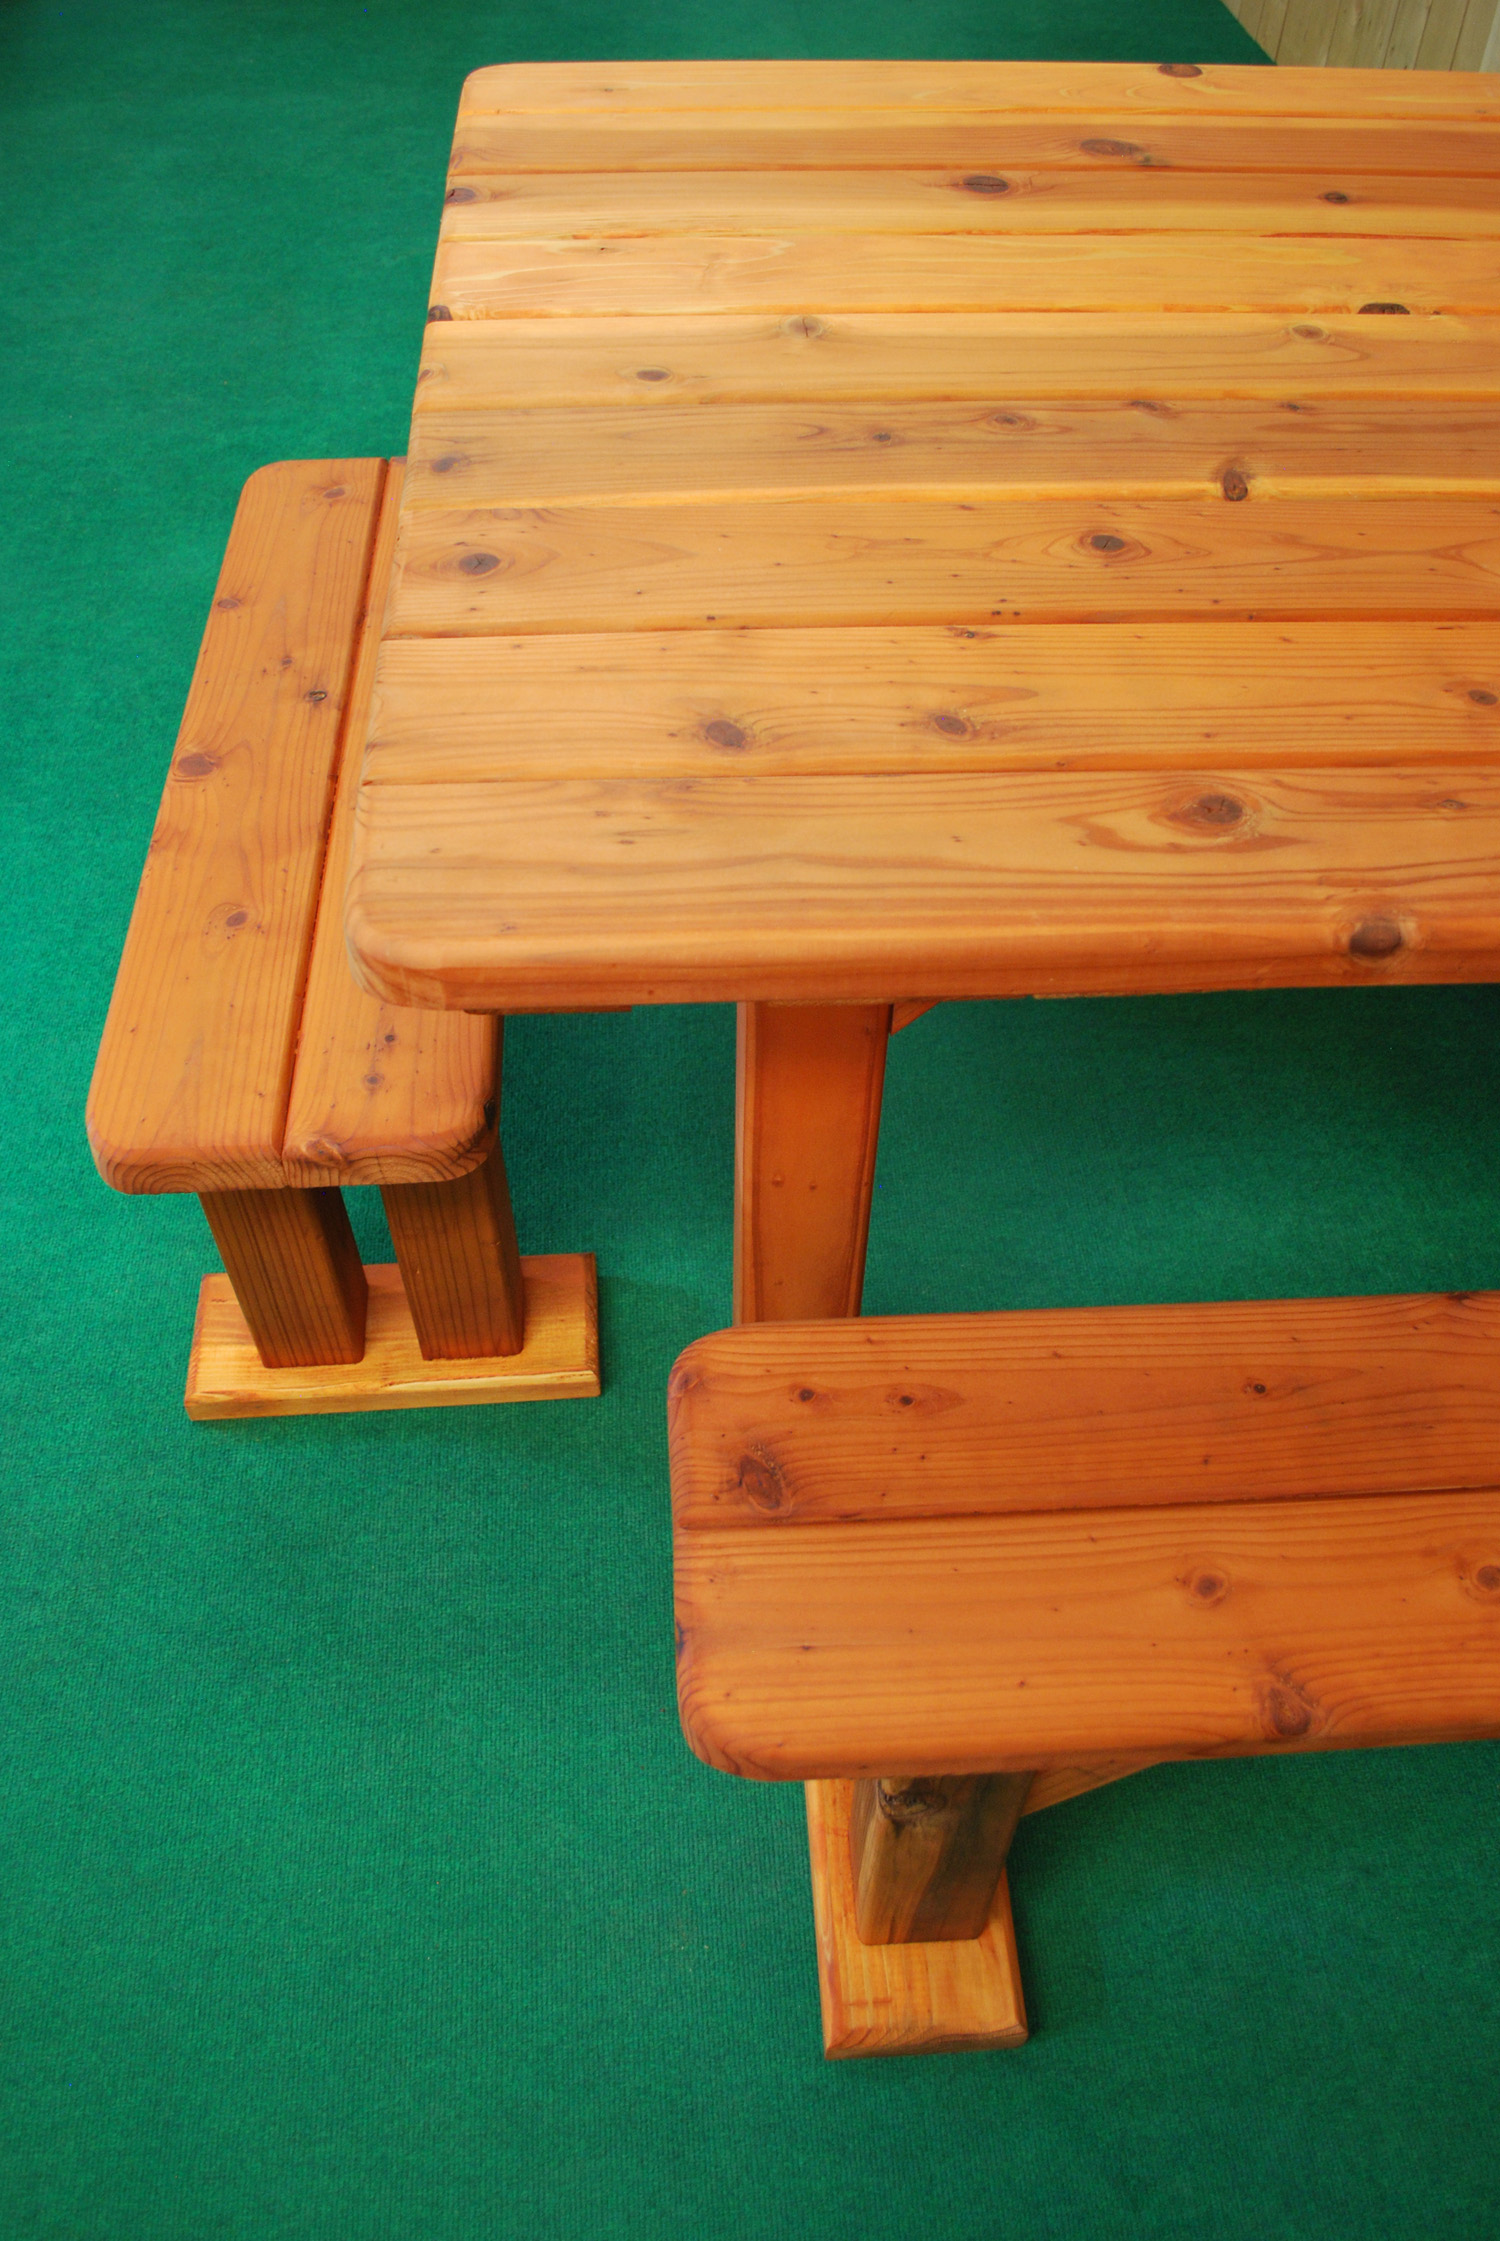 48" redwood square picnic table